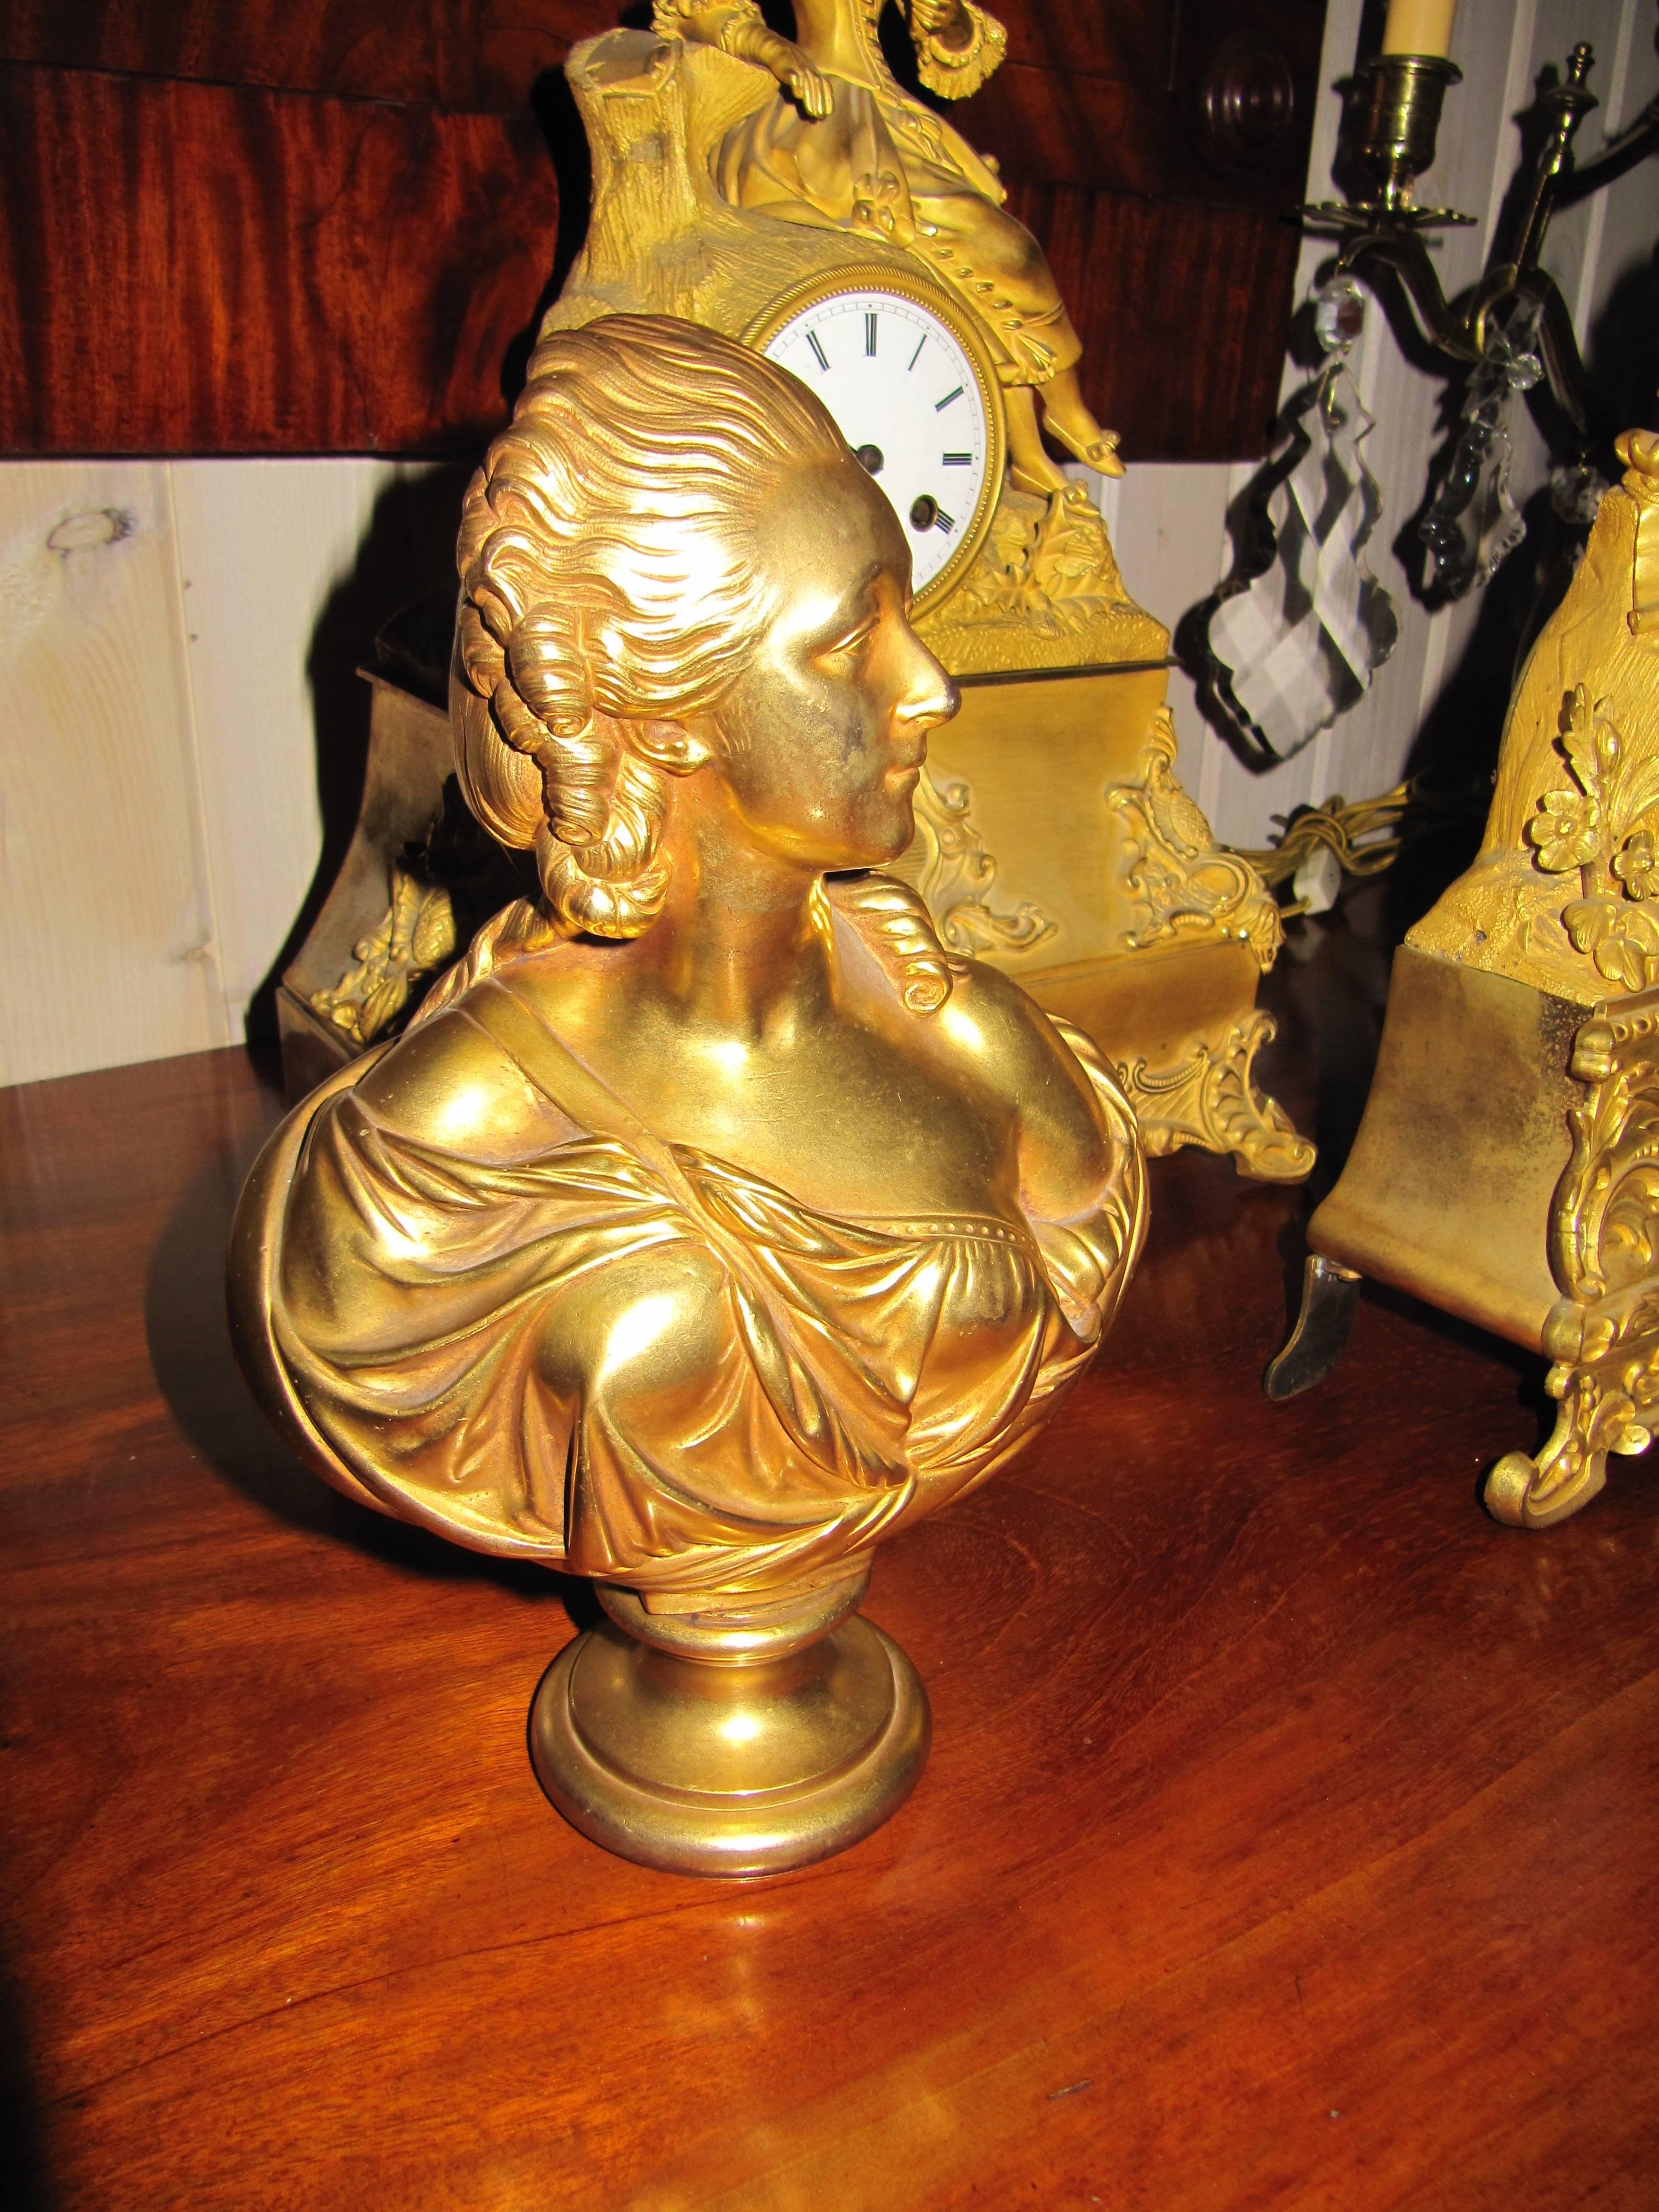 Charming gilt bronze bust of a woman, spectacular gilt finish.